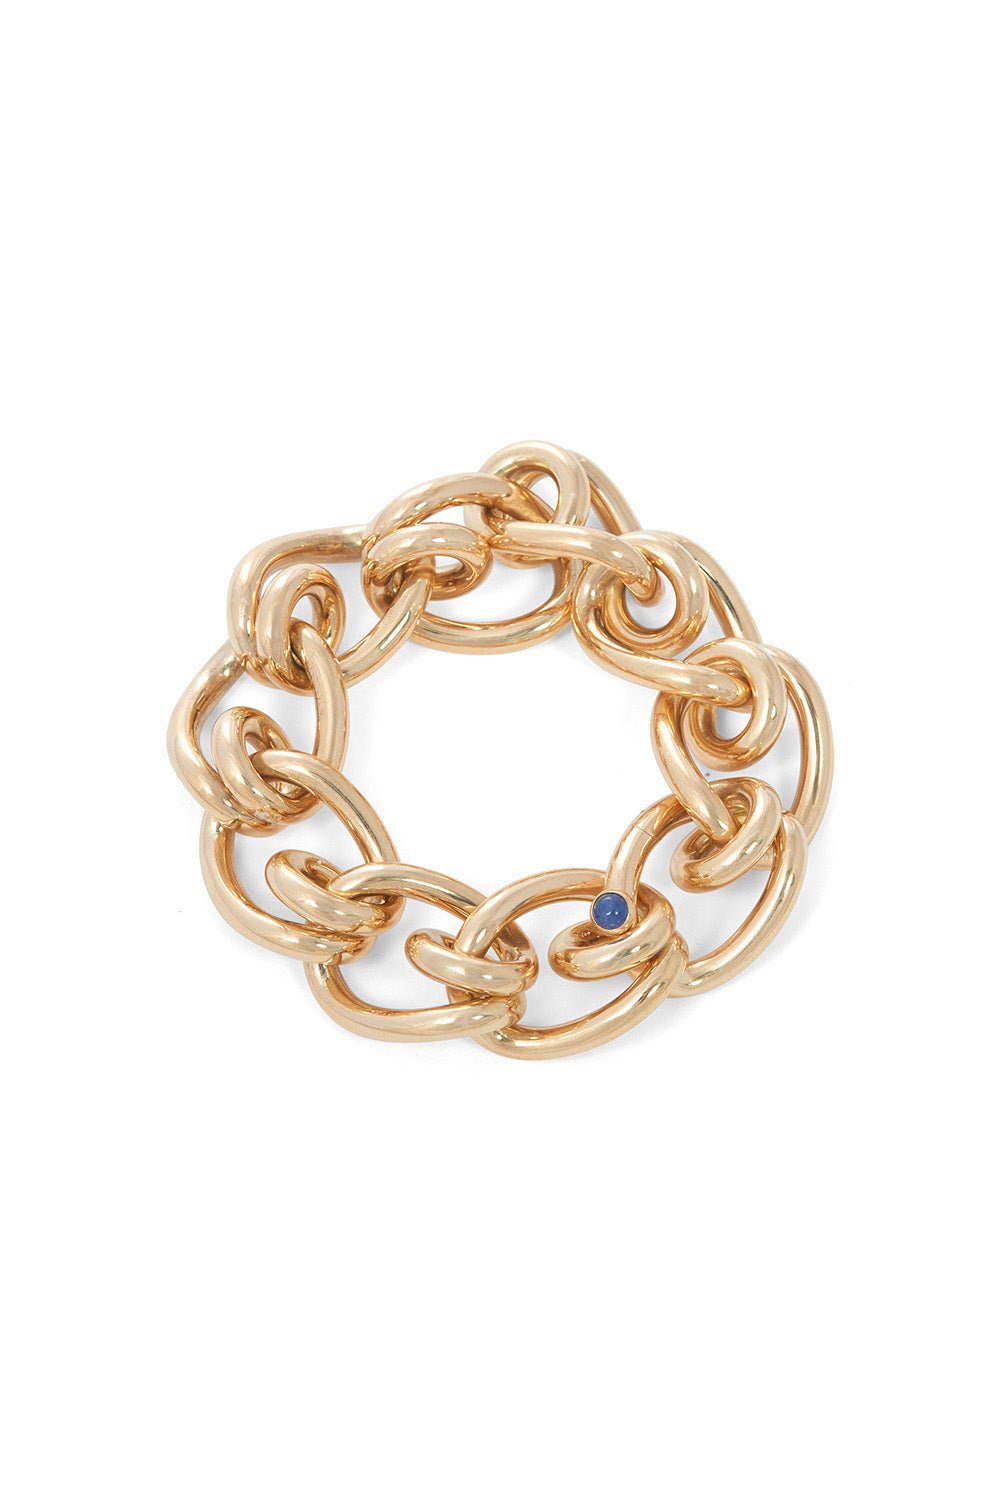 SIDNEY GARBER-Loop Link Bracelet - 16cm - Yellow Gold-YELLOW GOLD